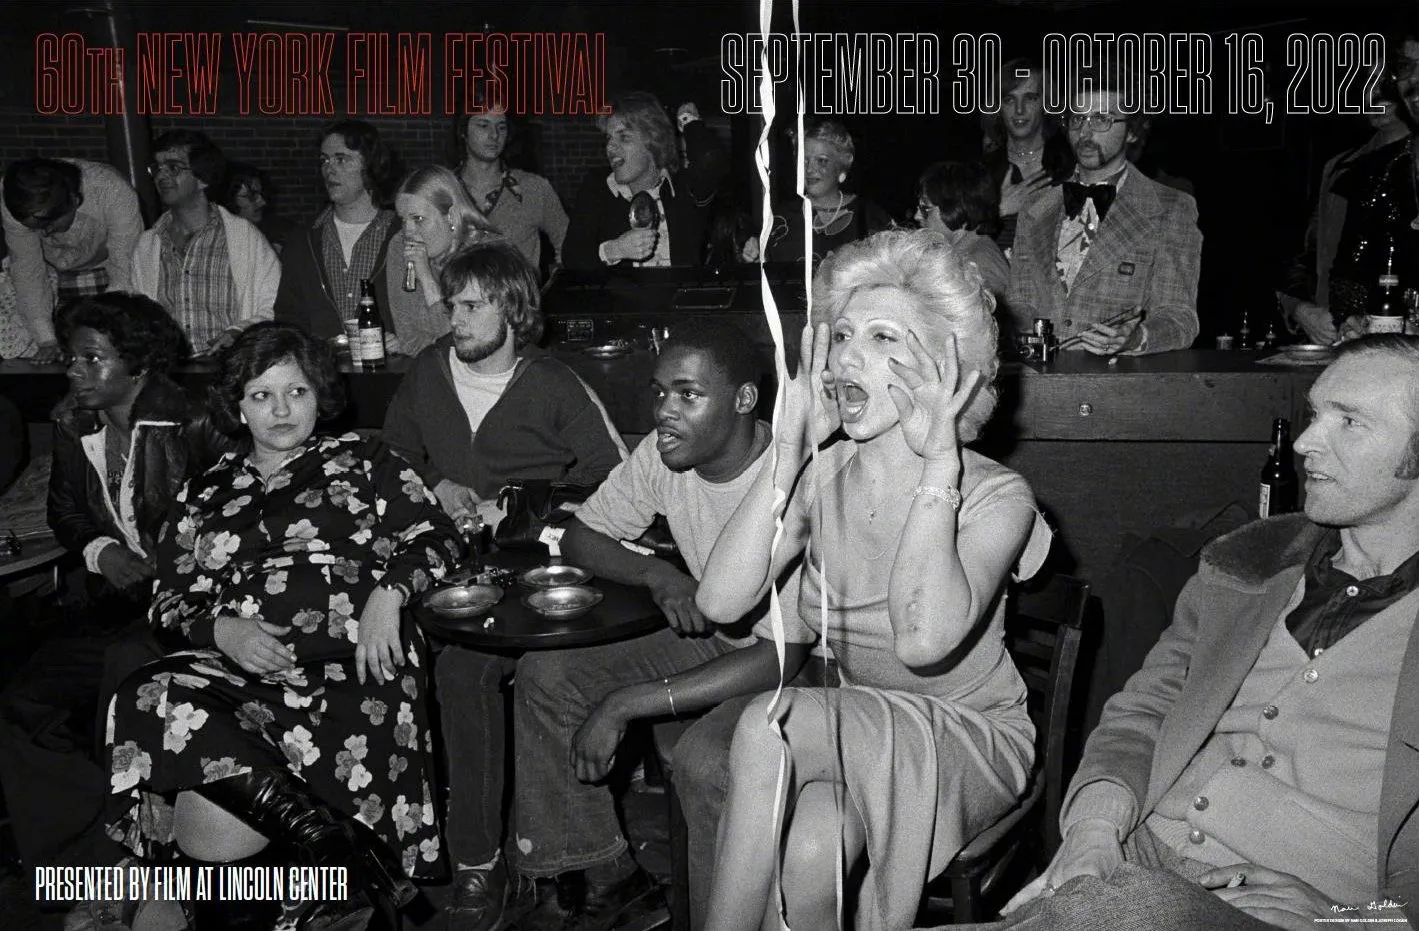 Official Poster for the 60th New York Film Festival | FMV6